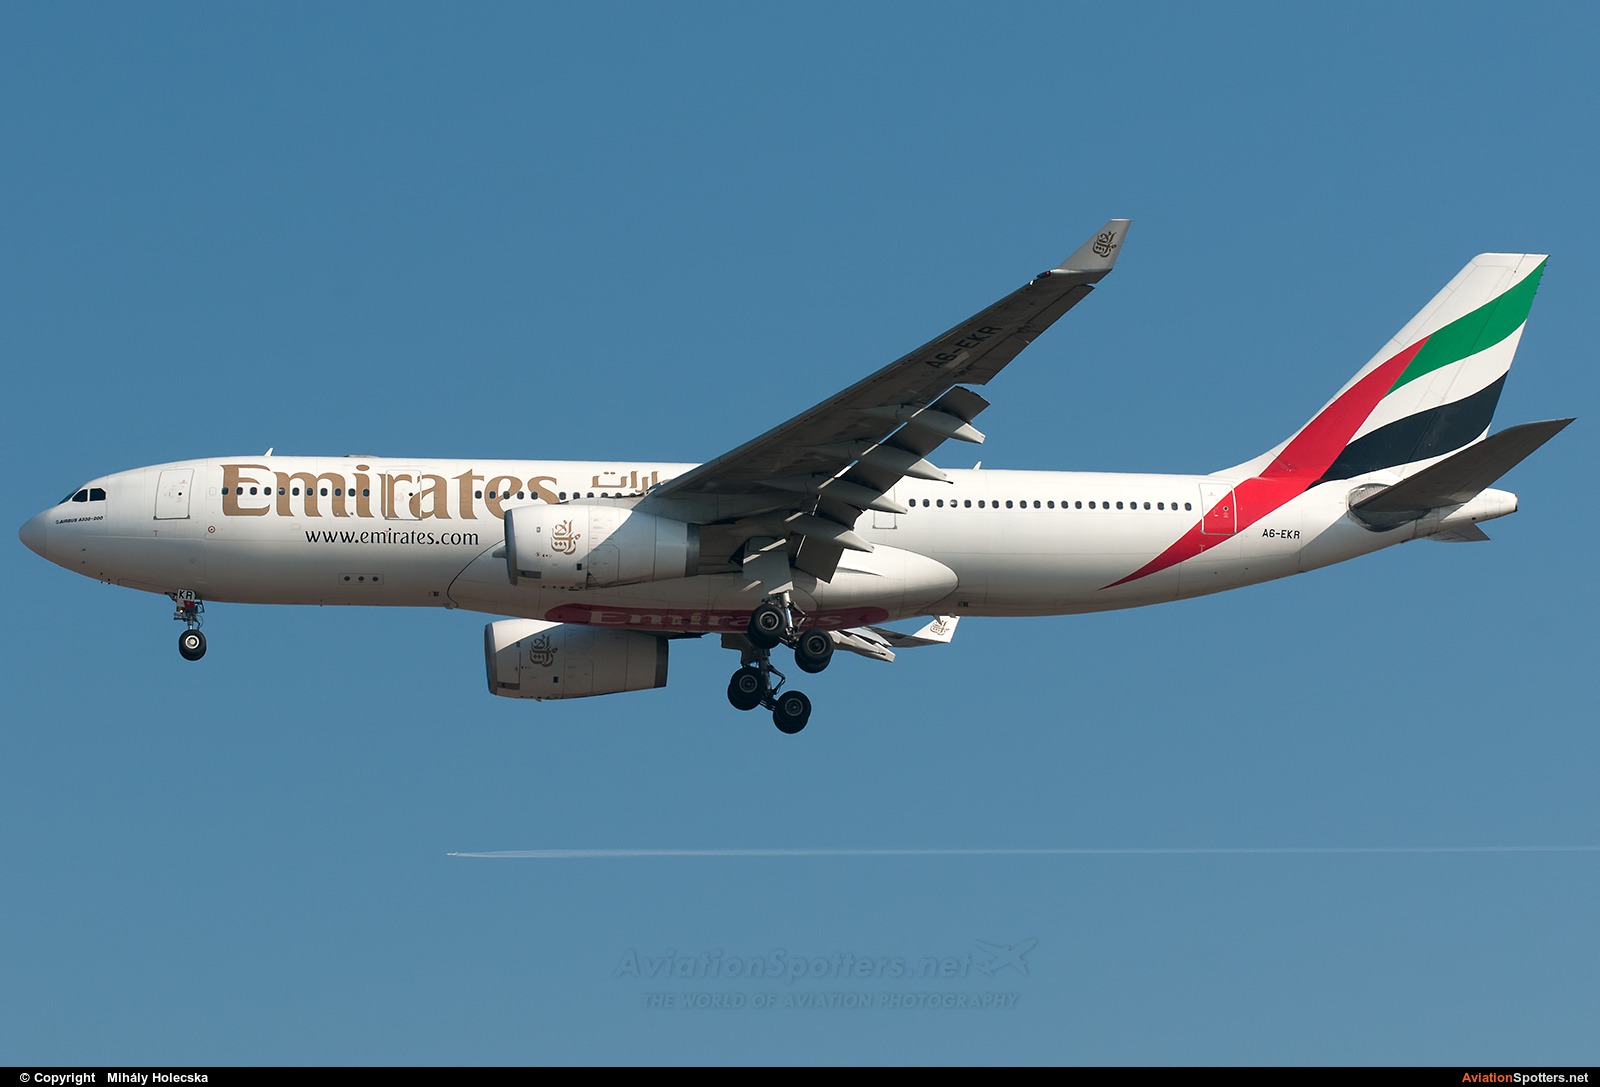 Emirates Airlines  -  A330-200  (A6-EKR) By Mihály Holecska (Misixx)